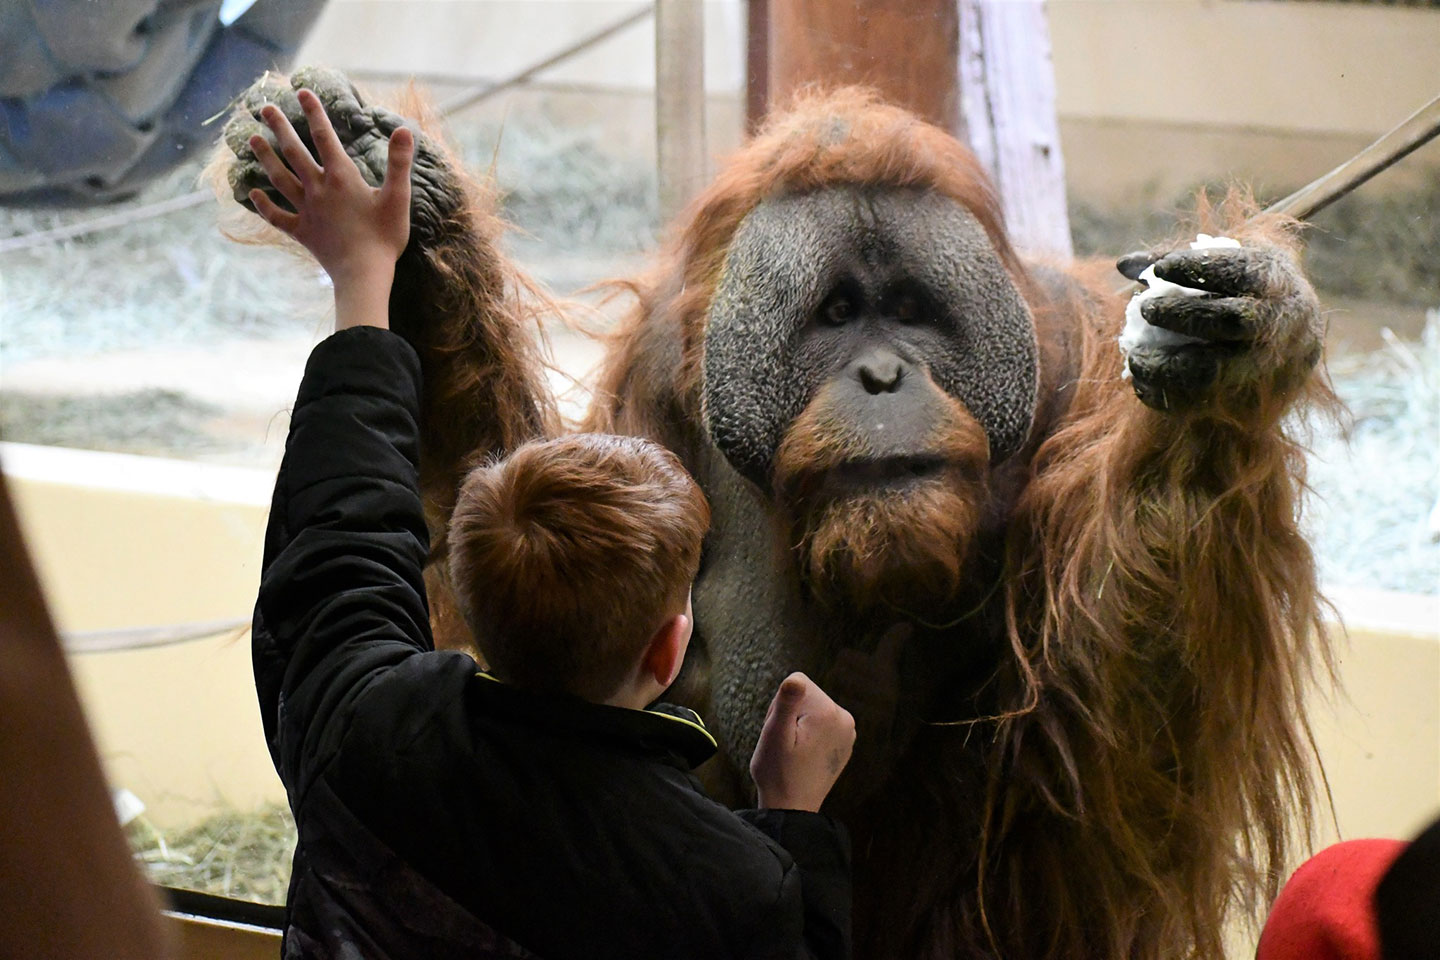 Boy connecting with orangutan through glass at Cheyenne Mountiain Zoo's Primate World exhibit